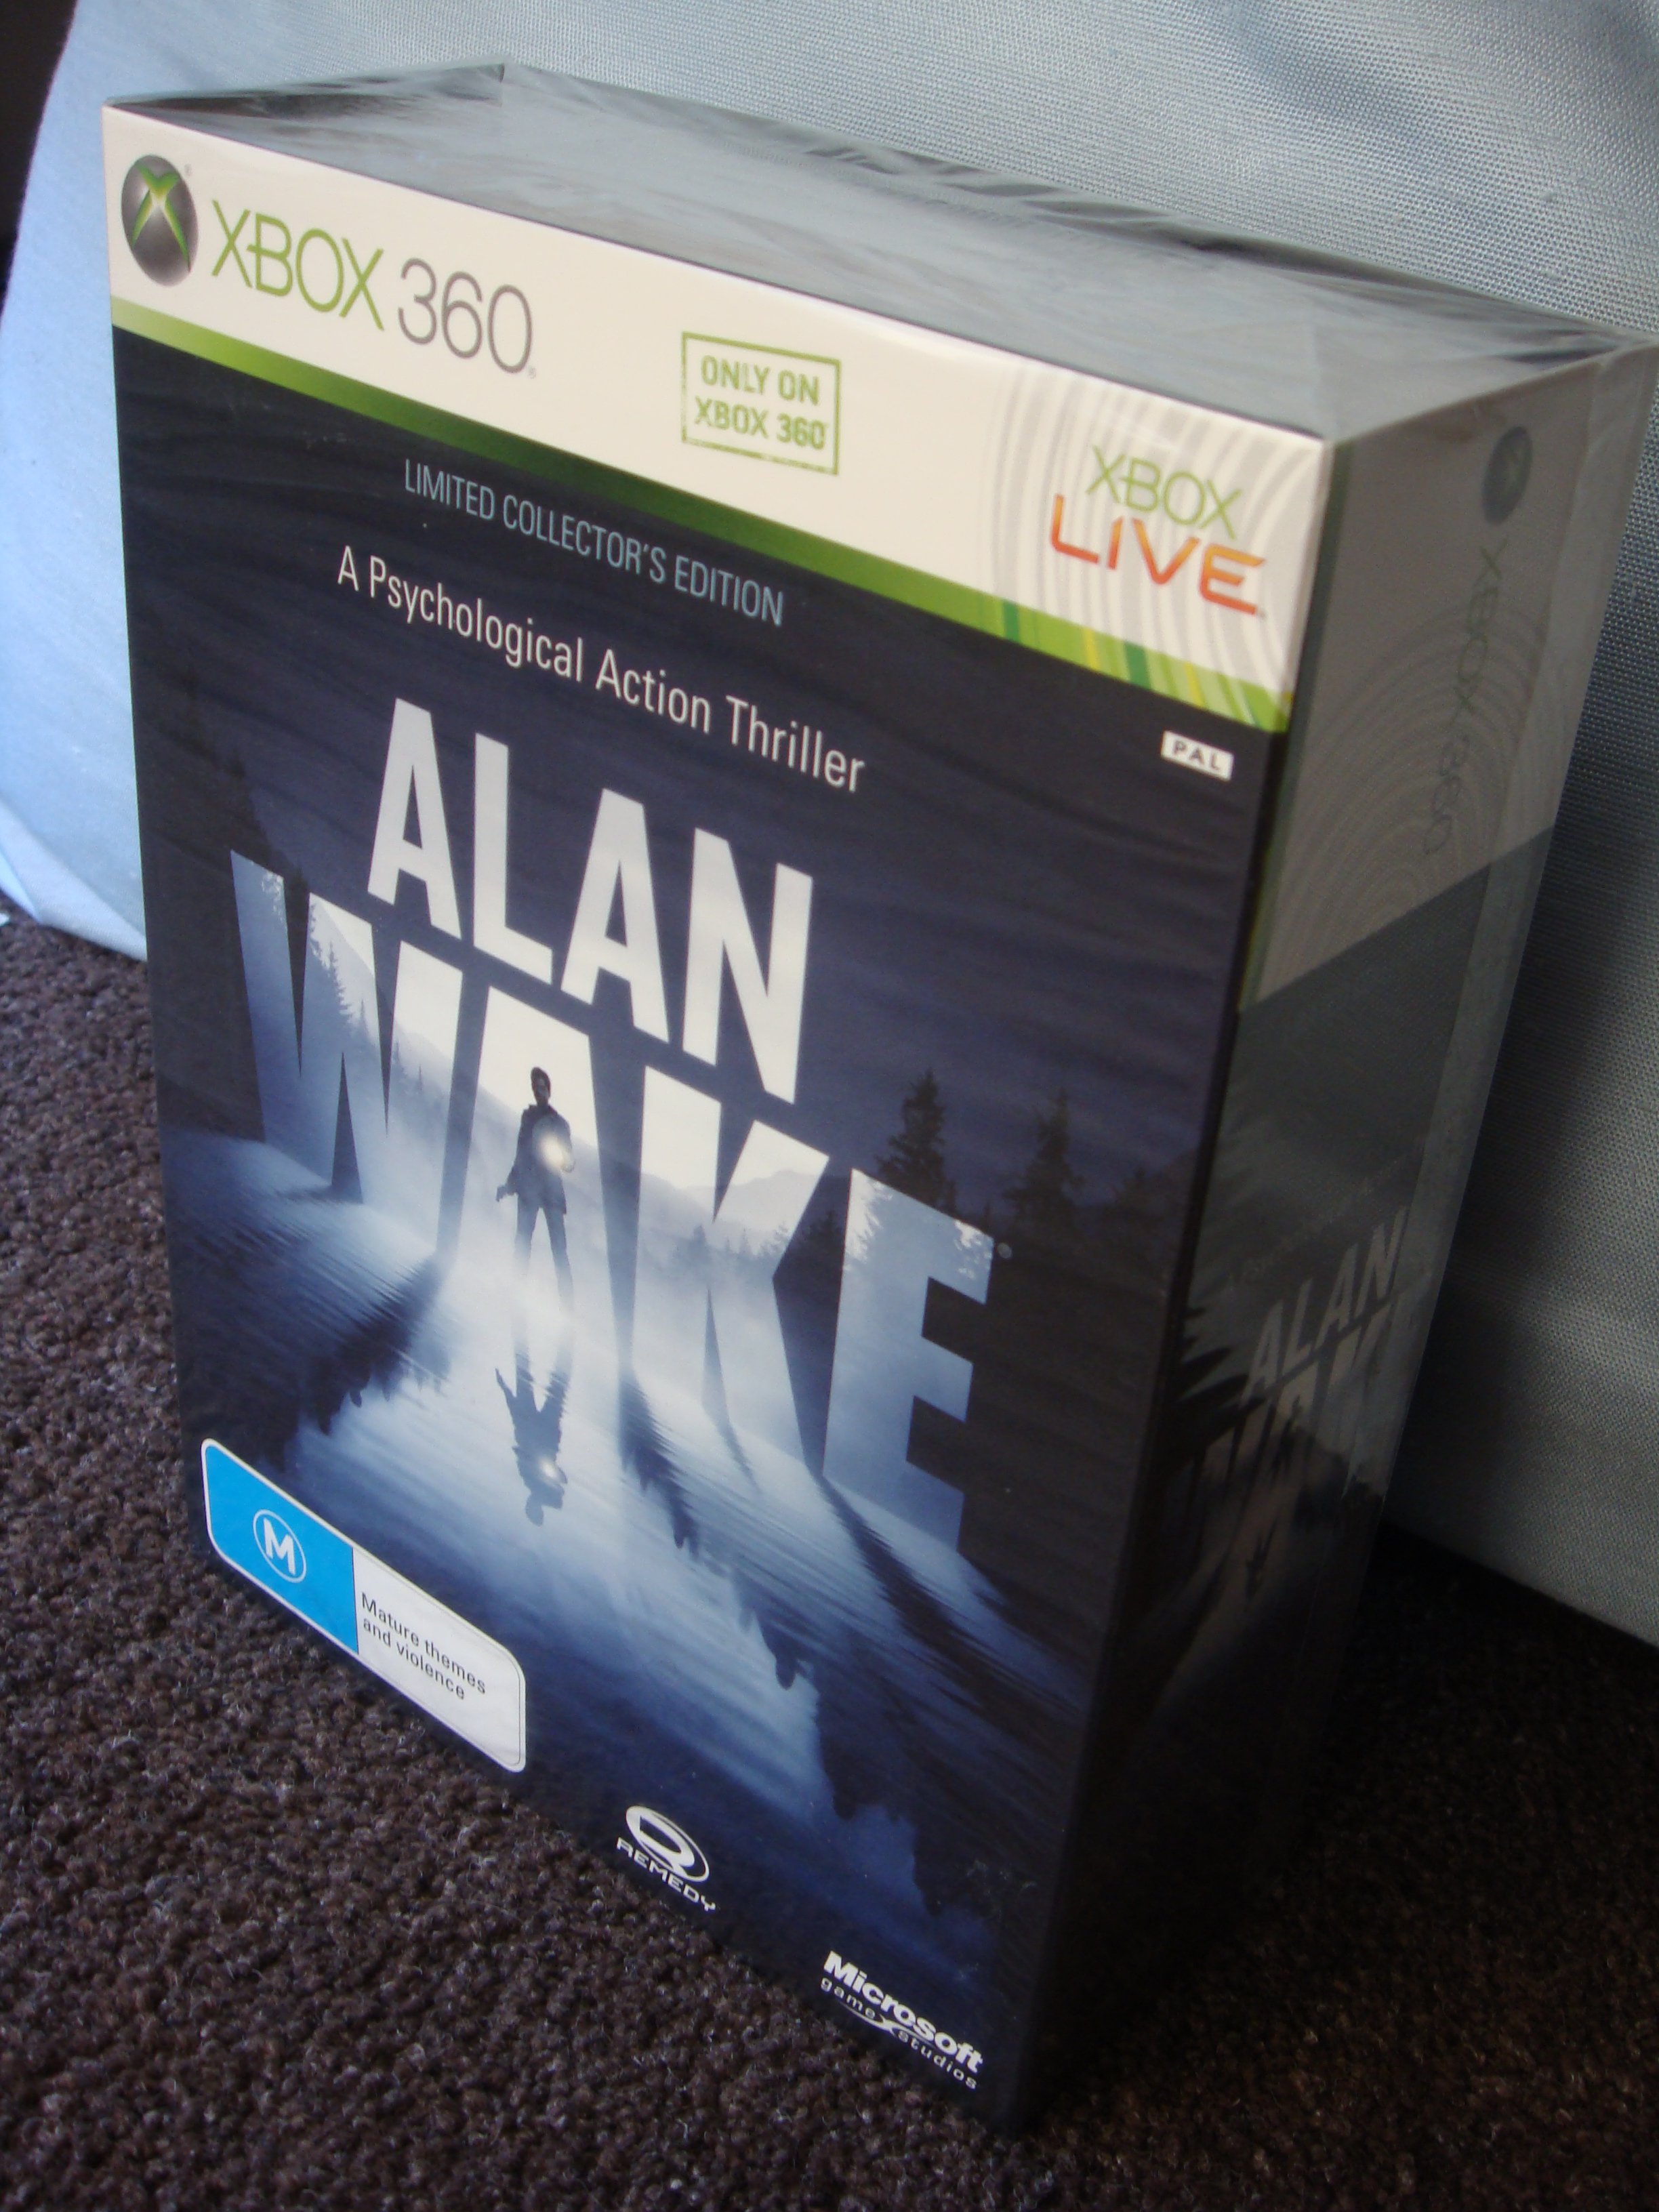 Alan Wake Collector's Edition | Steam